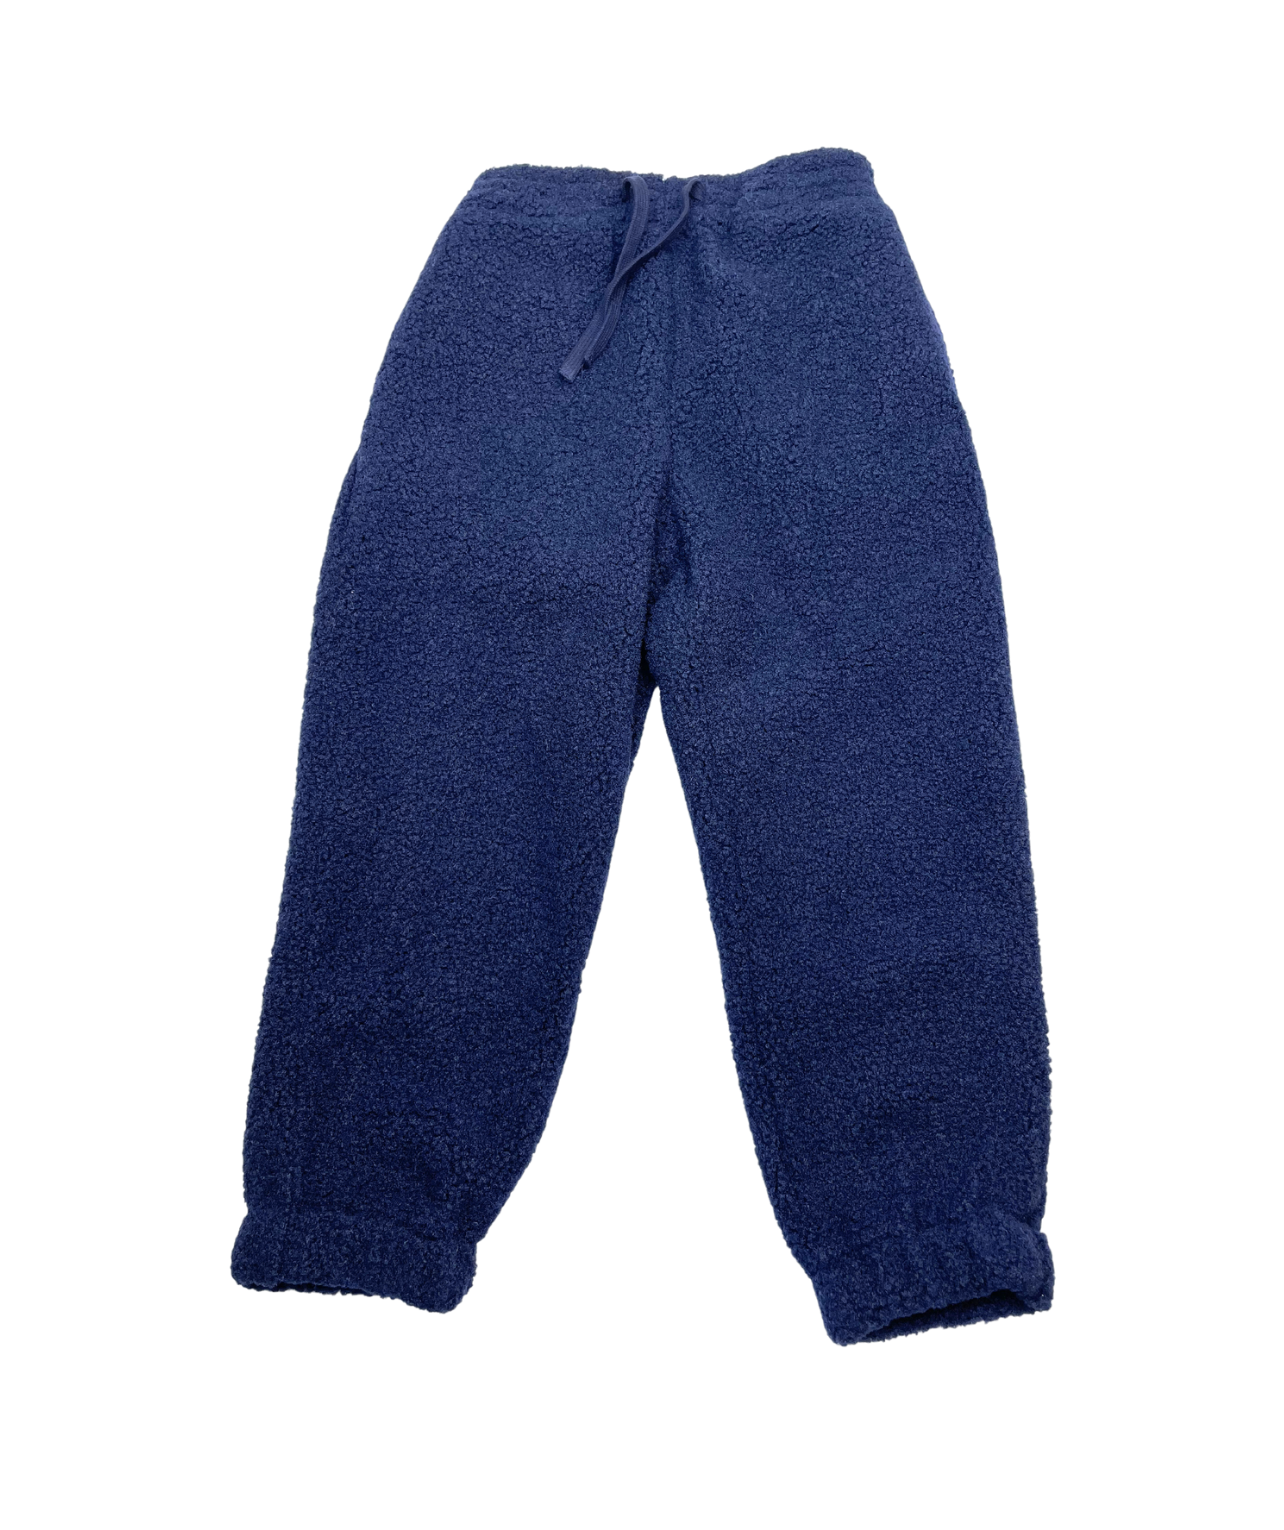 FINGER IN THE NOSE - Pantalon moumoute bleu - 8/9 ans